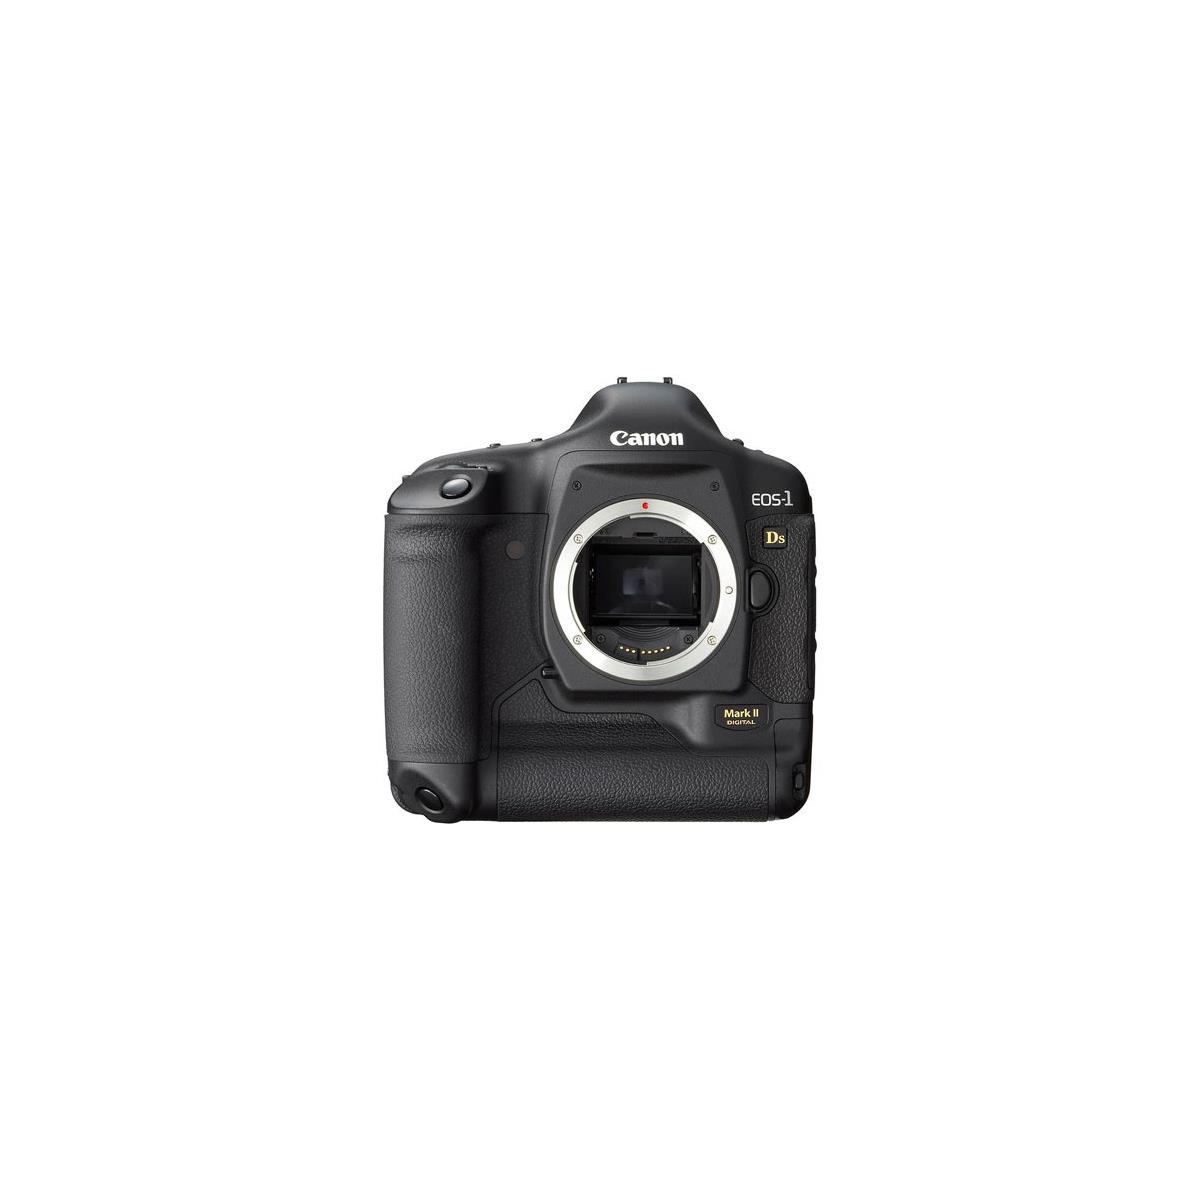 Image of Canon EOS-1Ds Mark II DSLR Camera Bundle